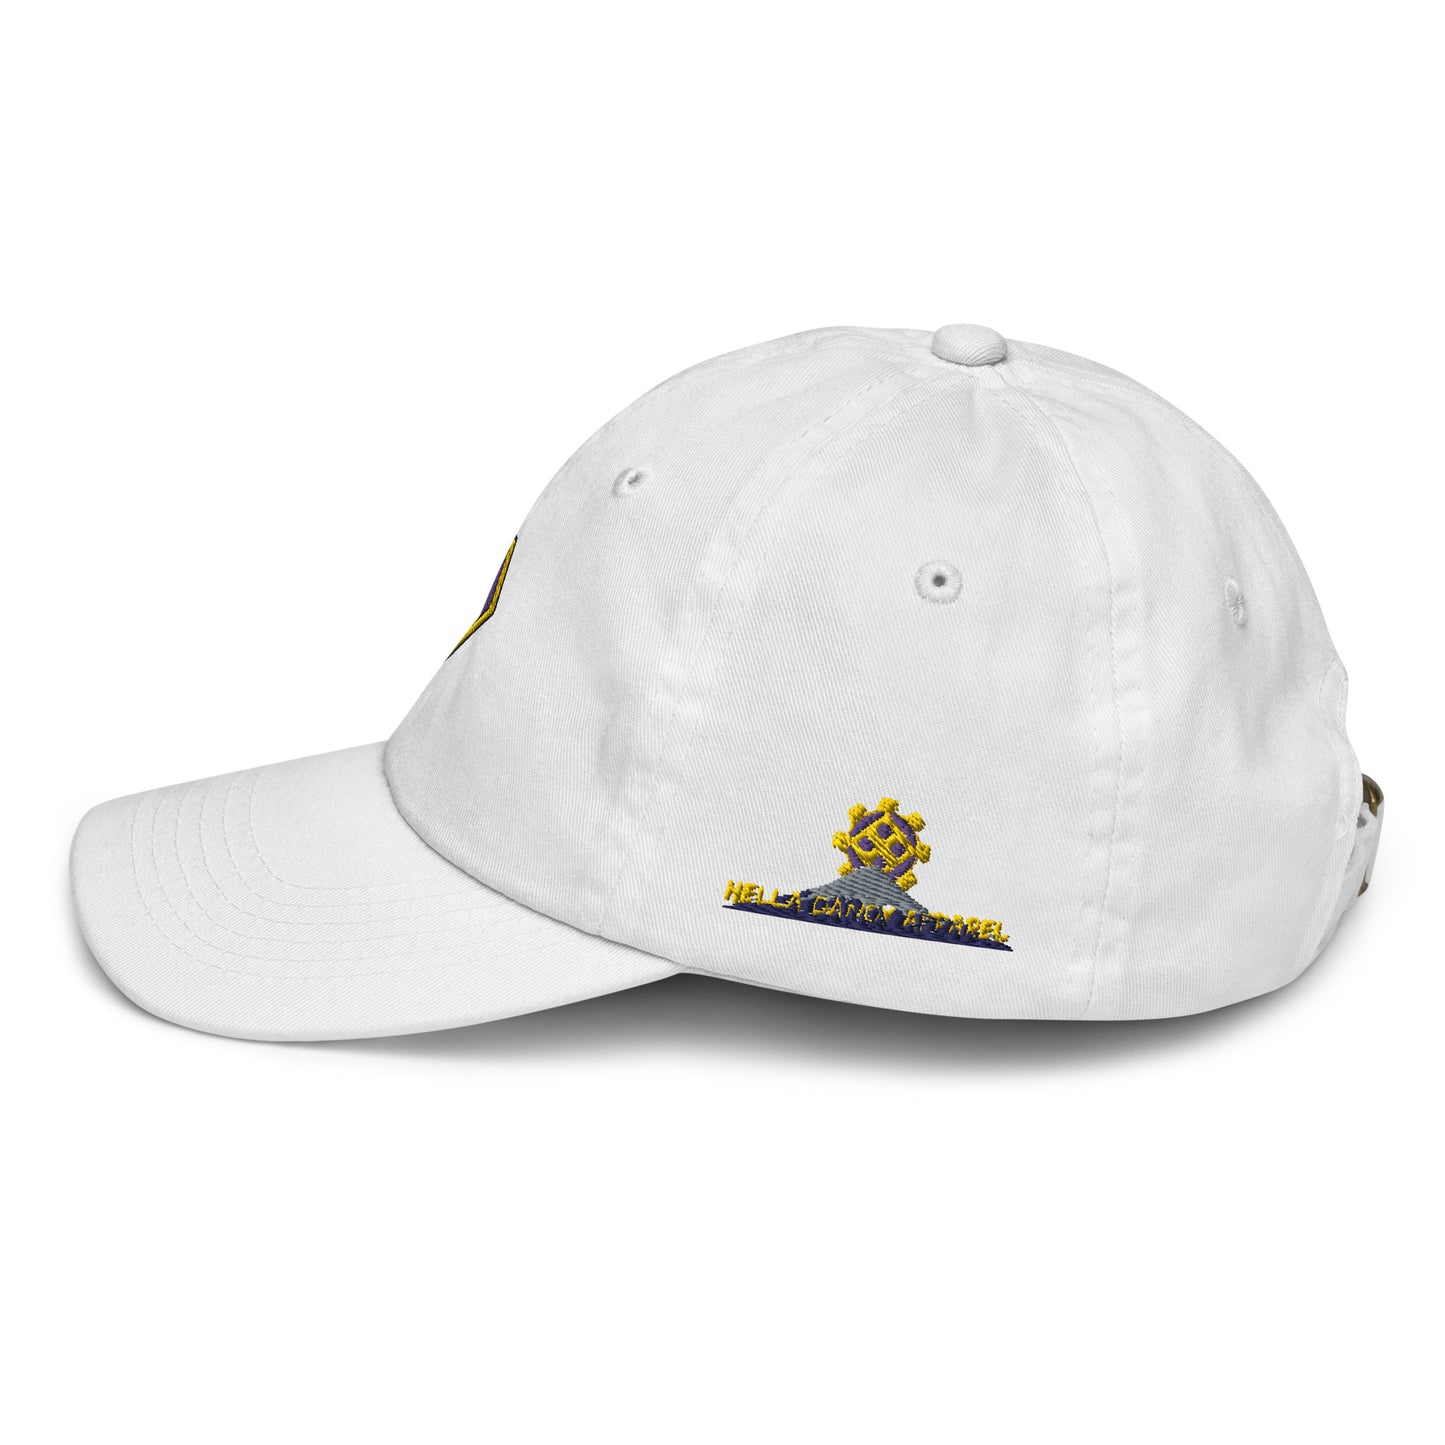 Super Youth baseball cap